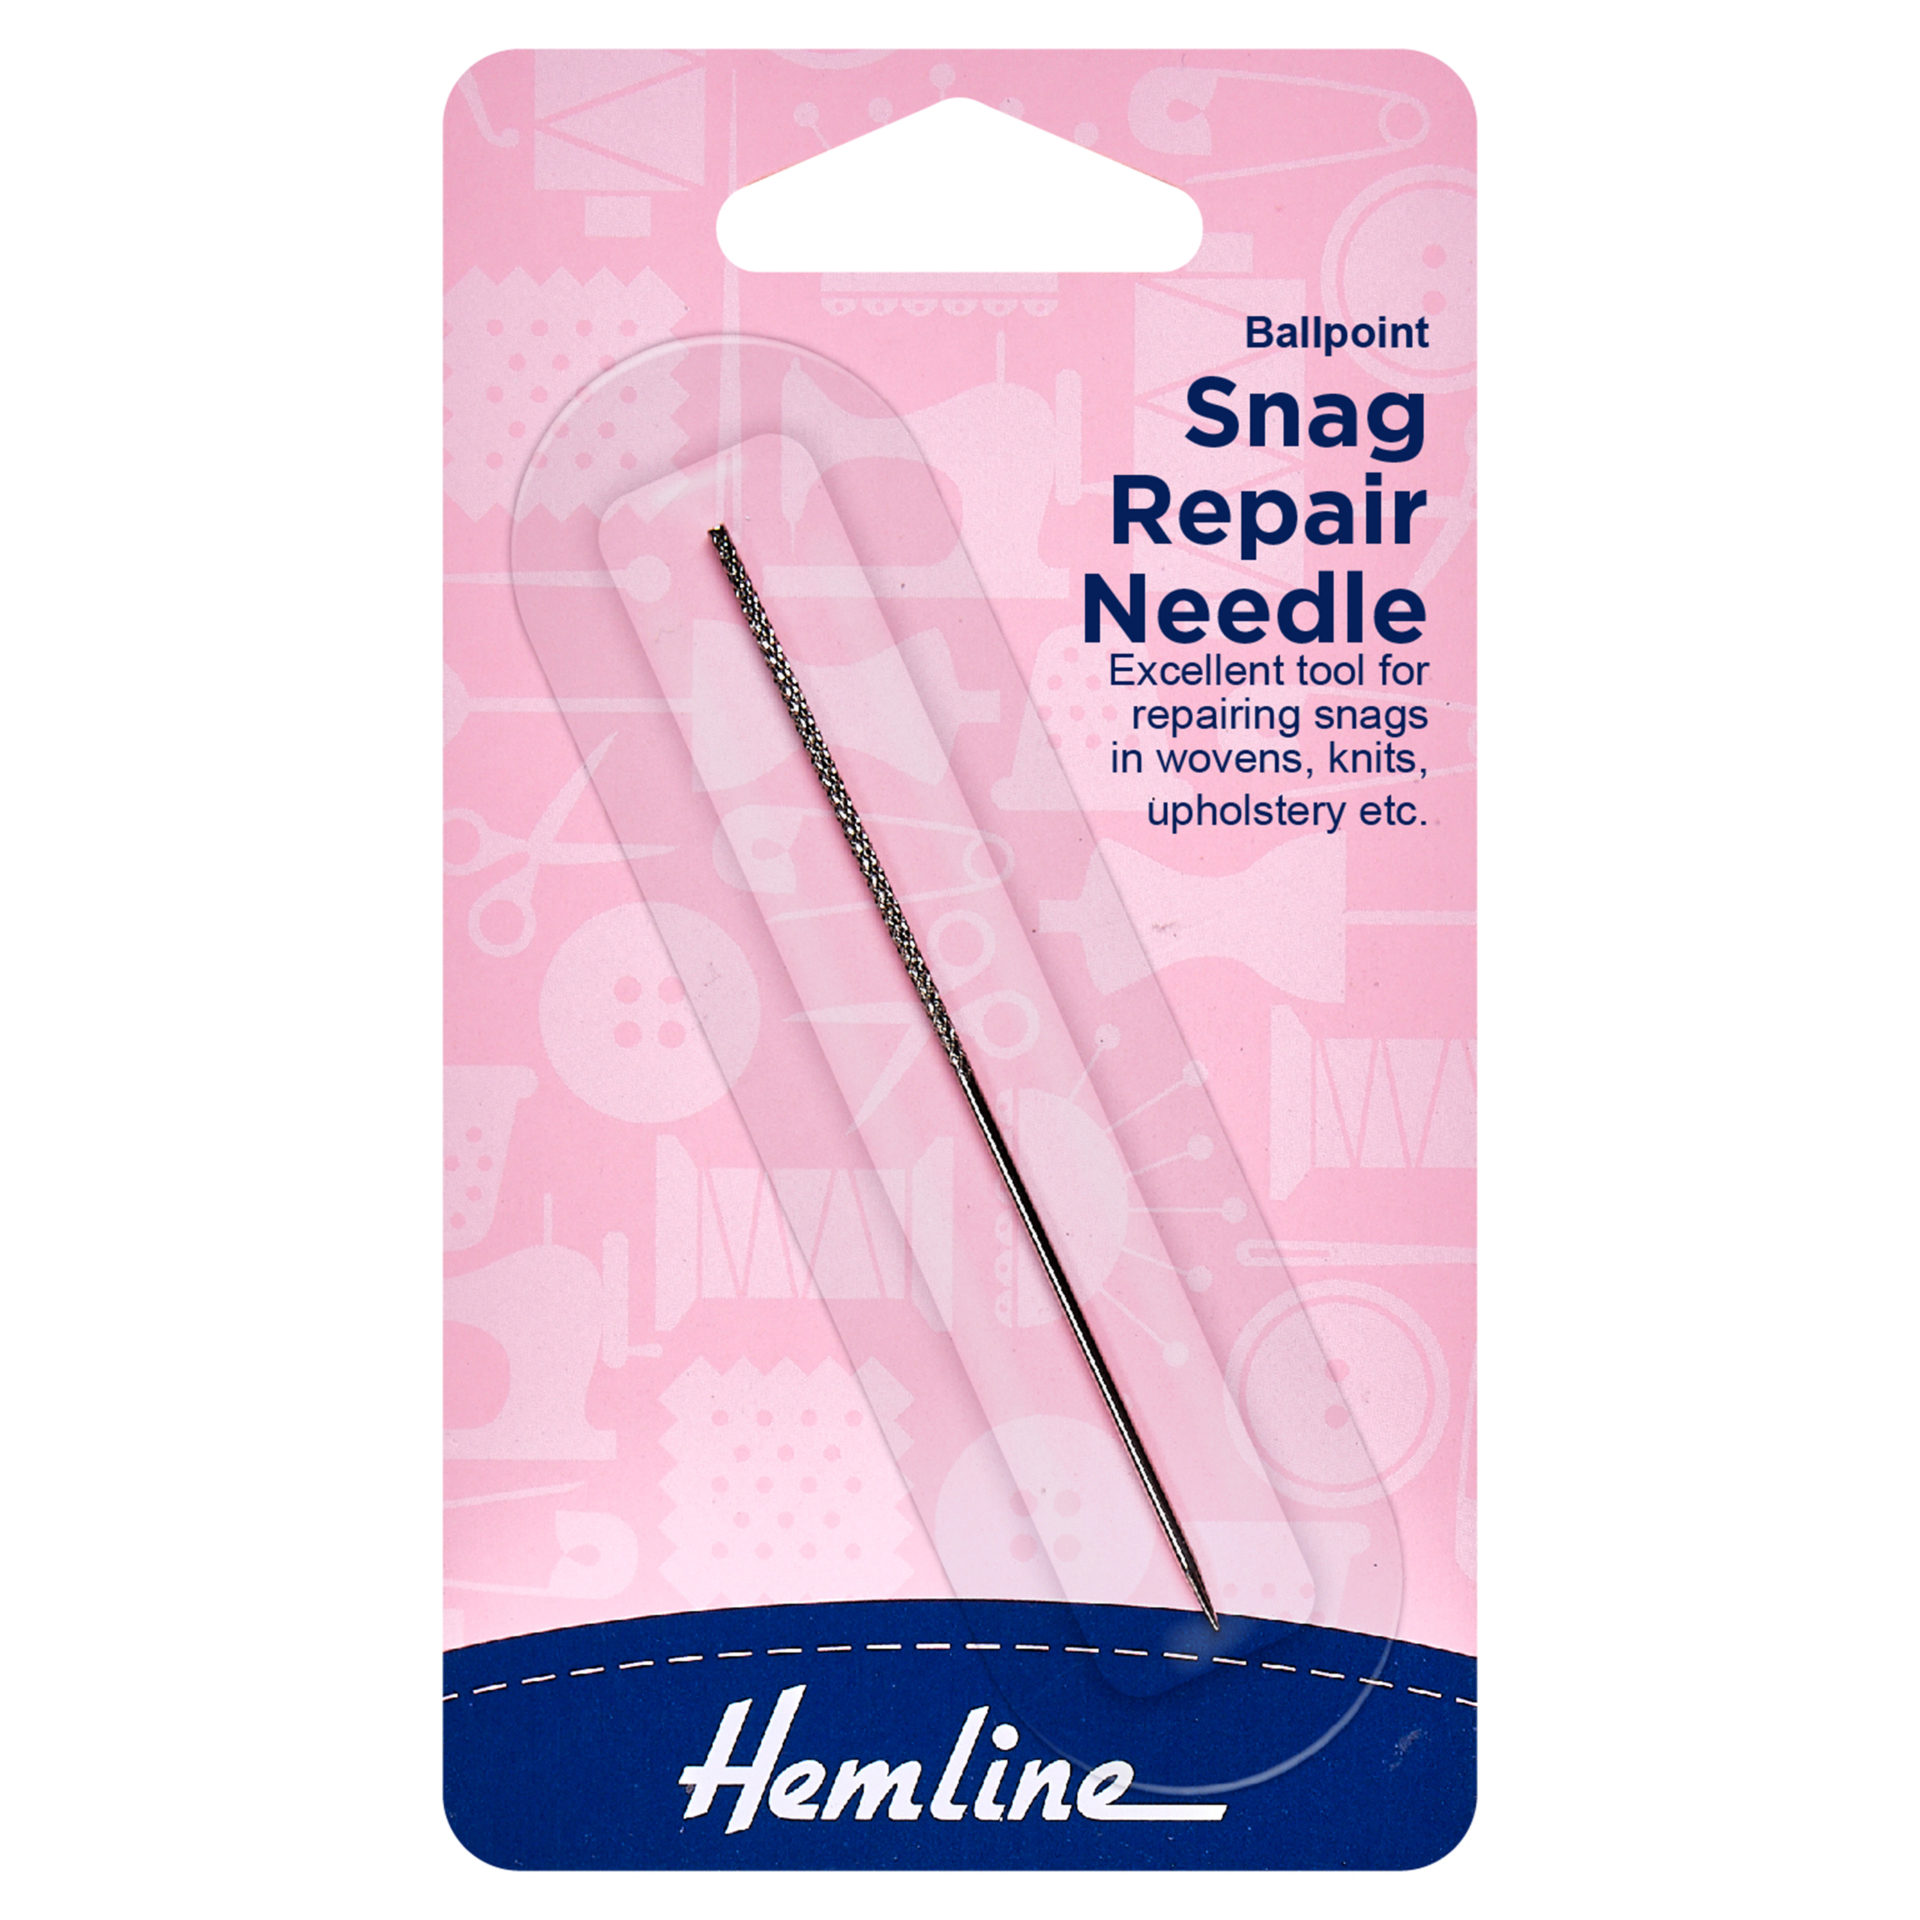 Hemline Ballpoint Snag Repair Needle